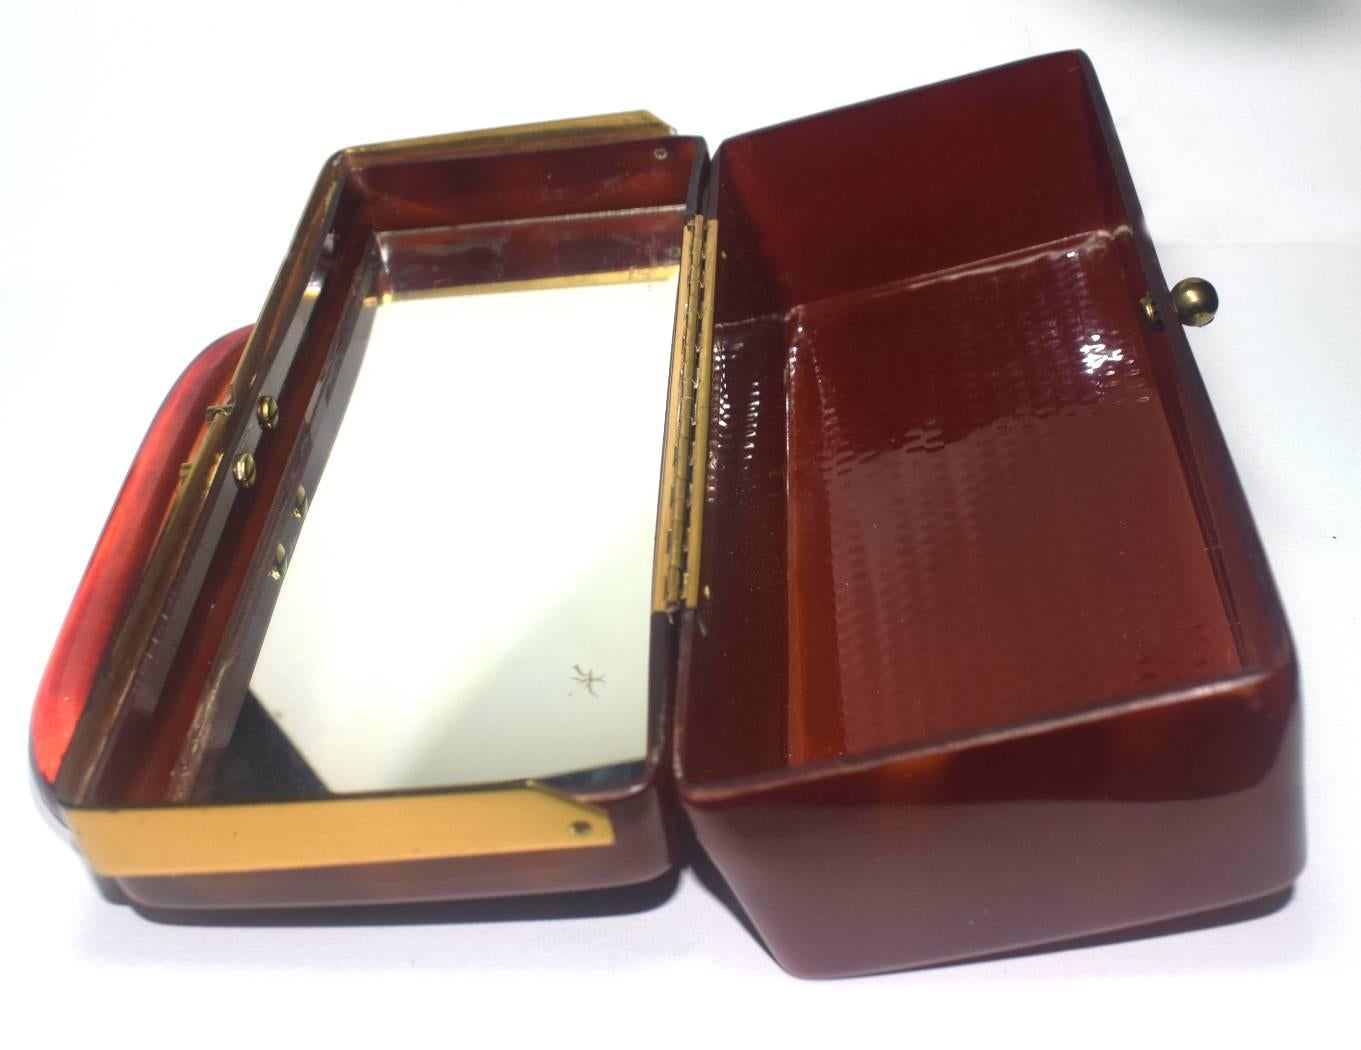 Brass Art Deco Lucite Box Bag in Deep Caramel Coloring